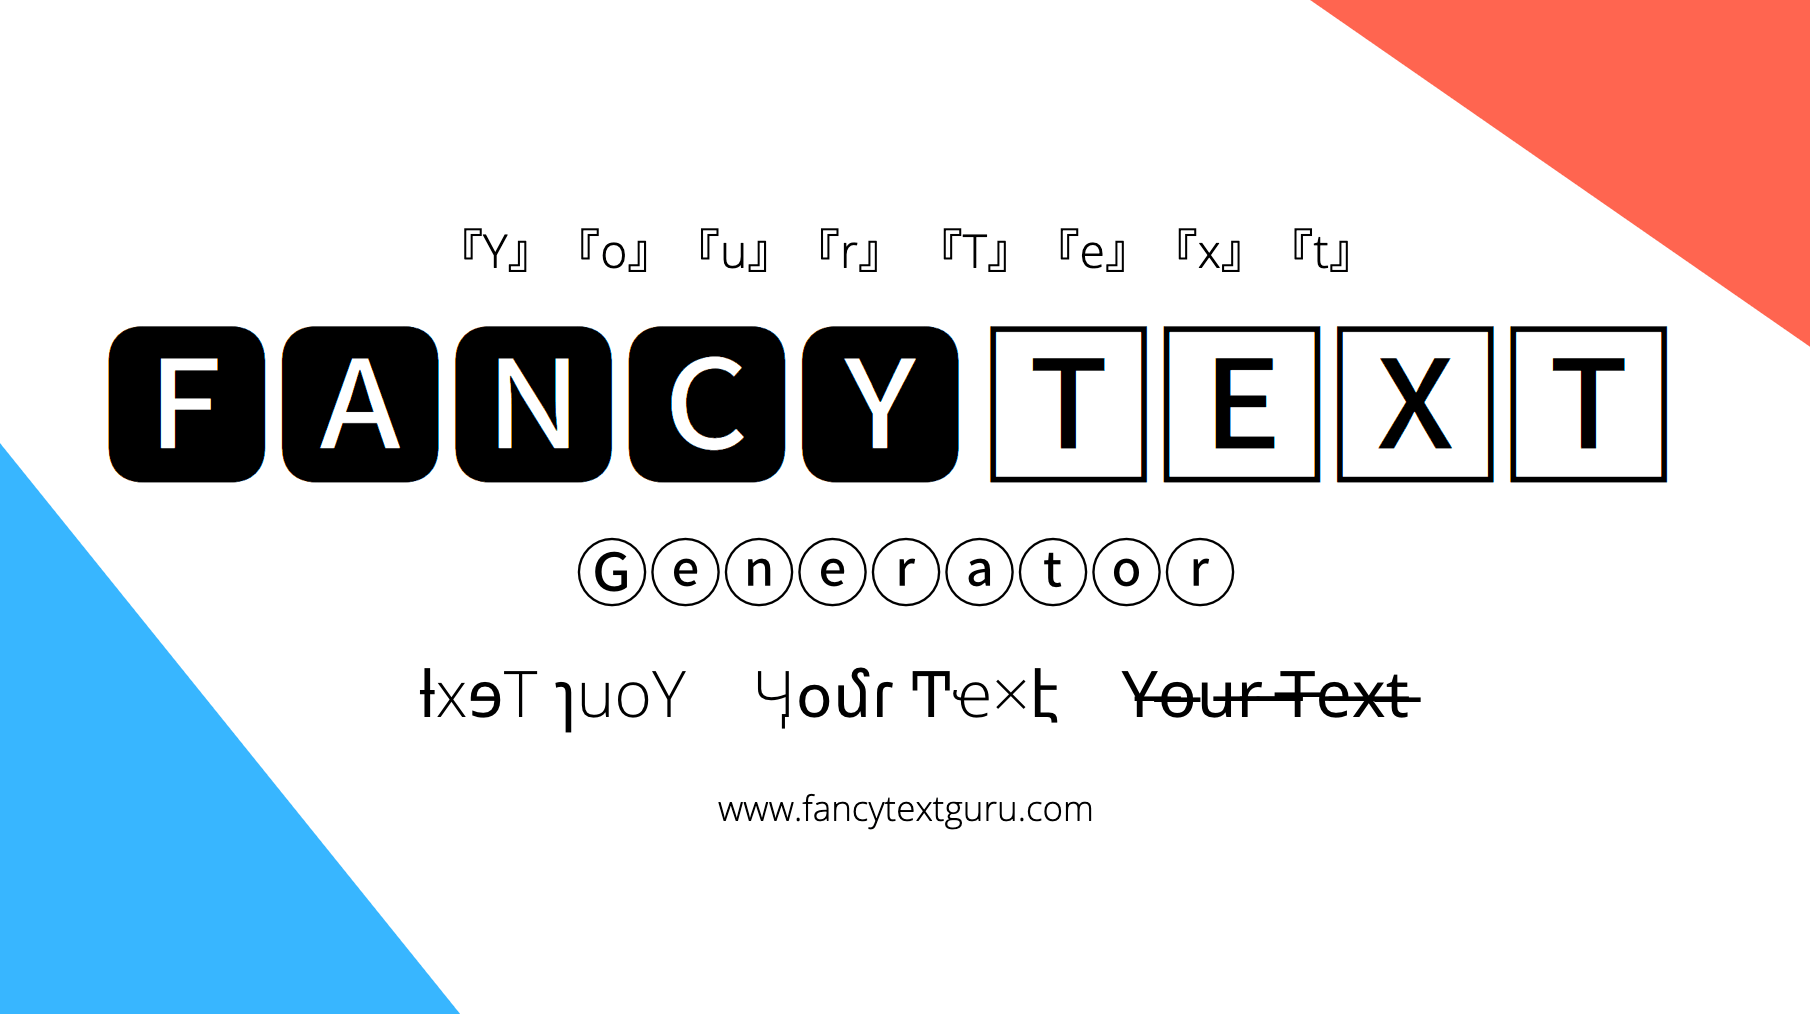 free online font converter